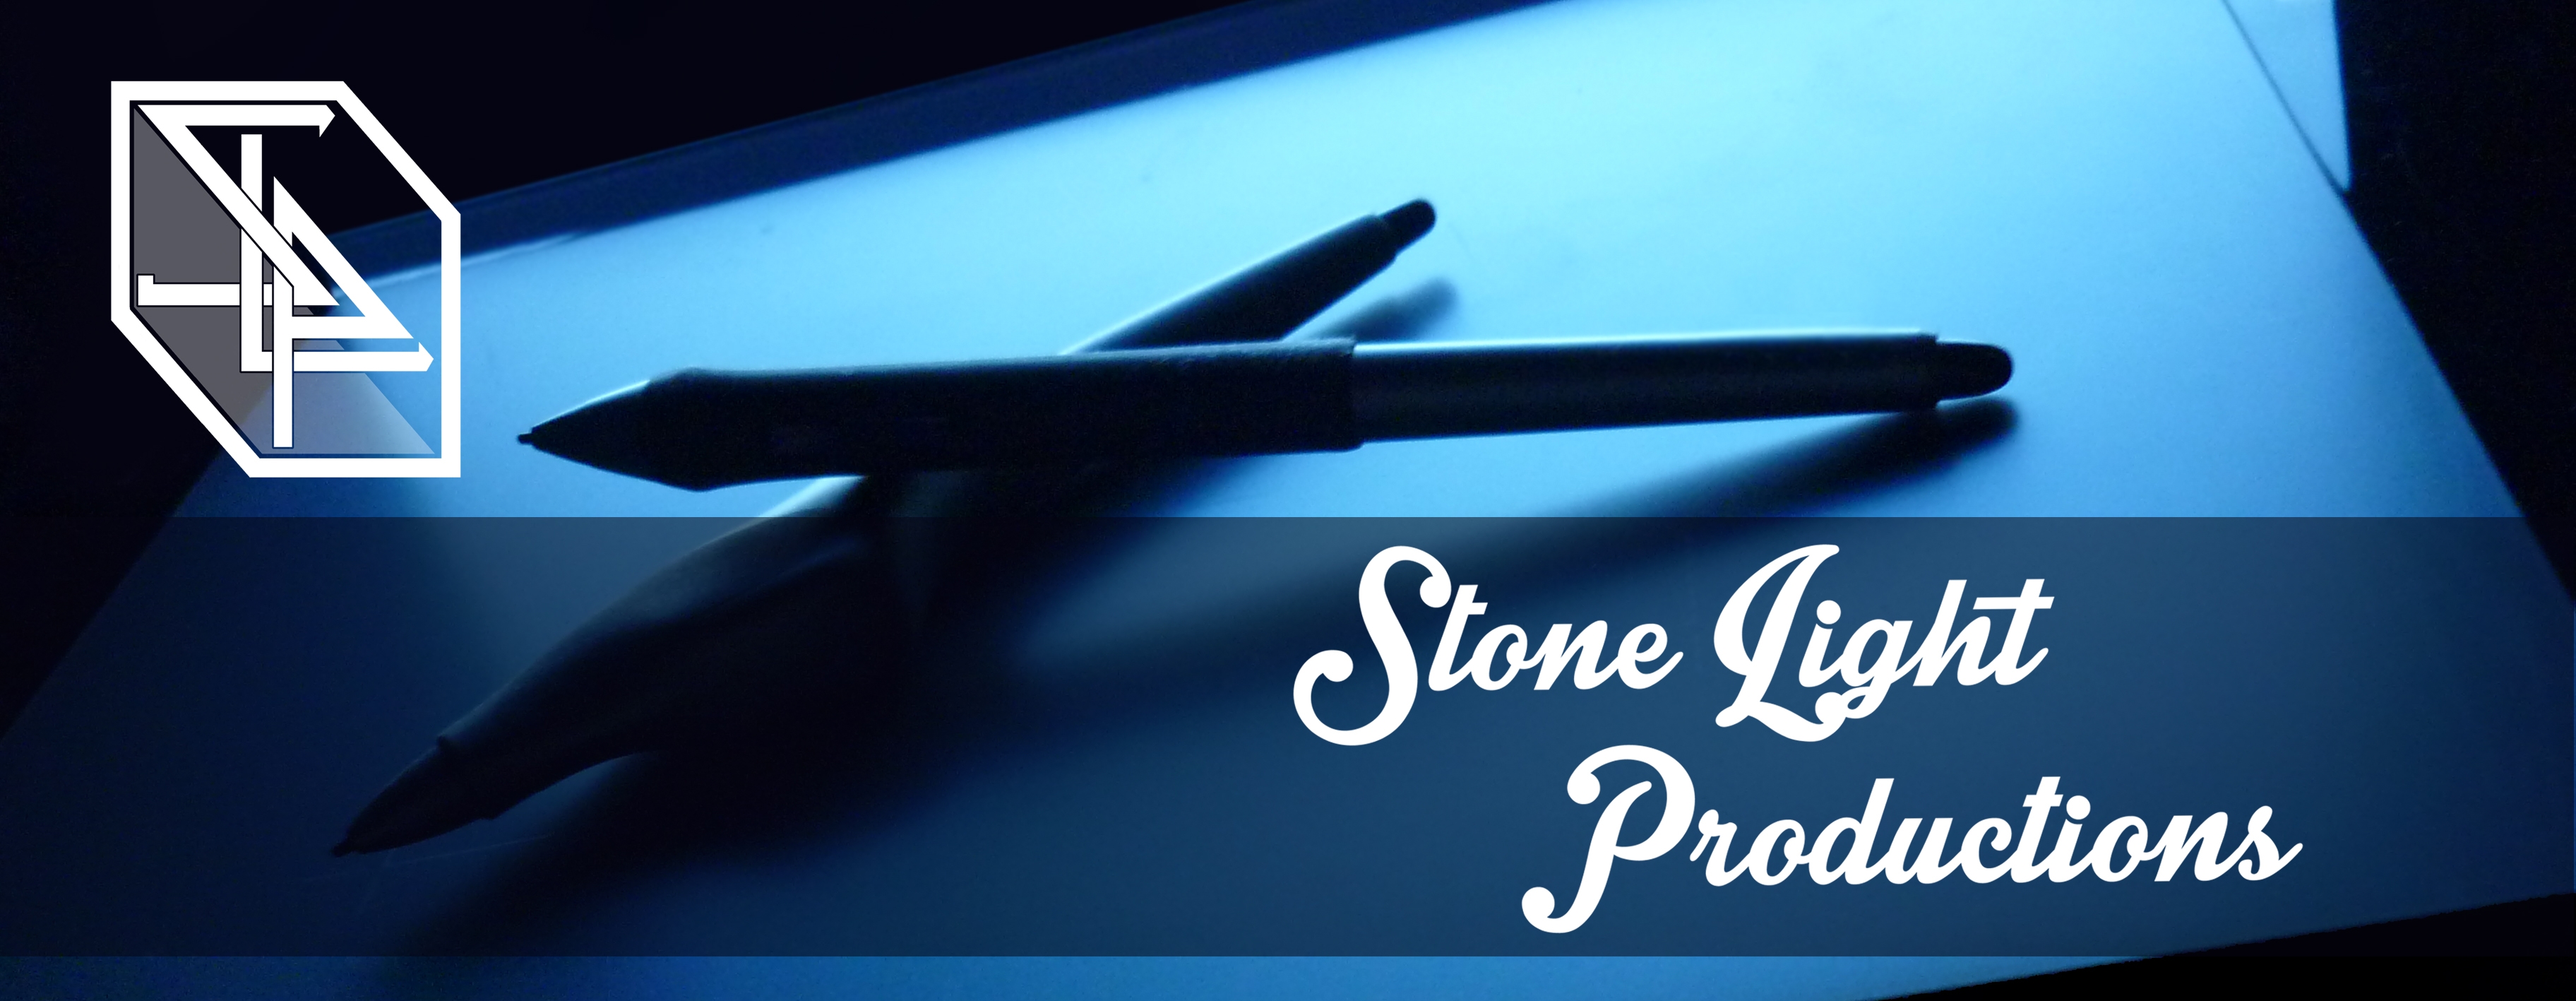 Stone Light Productions graphisme design webdesign